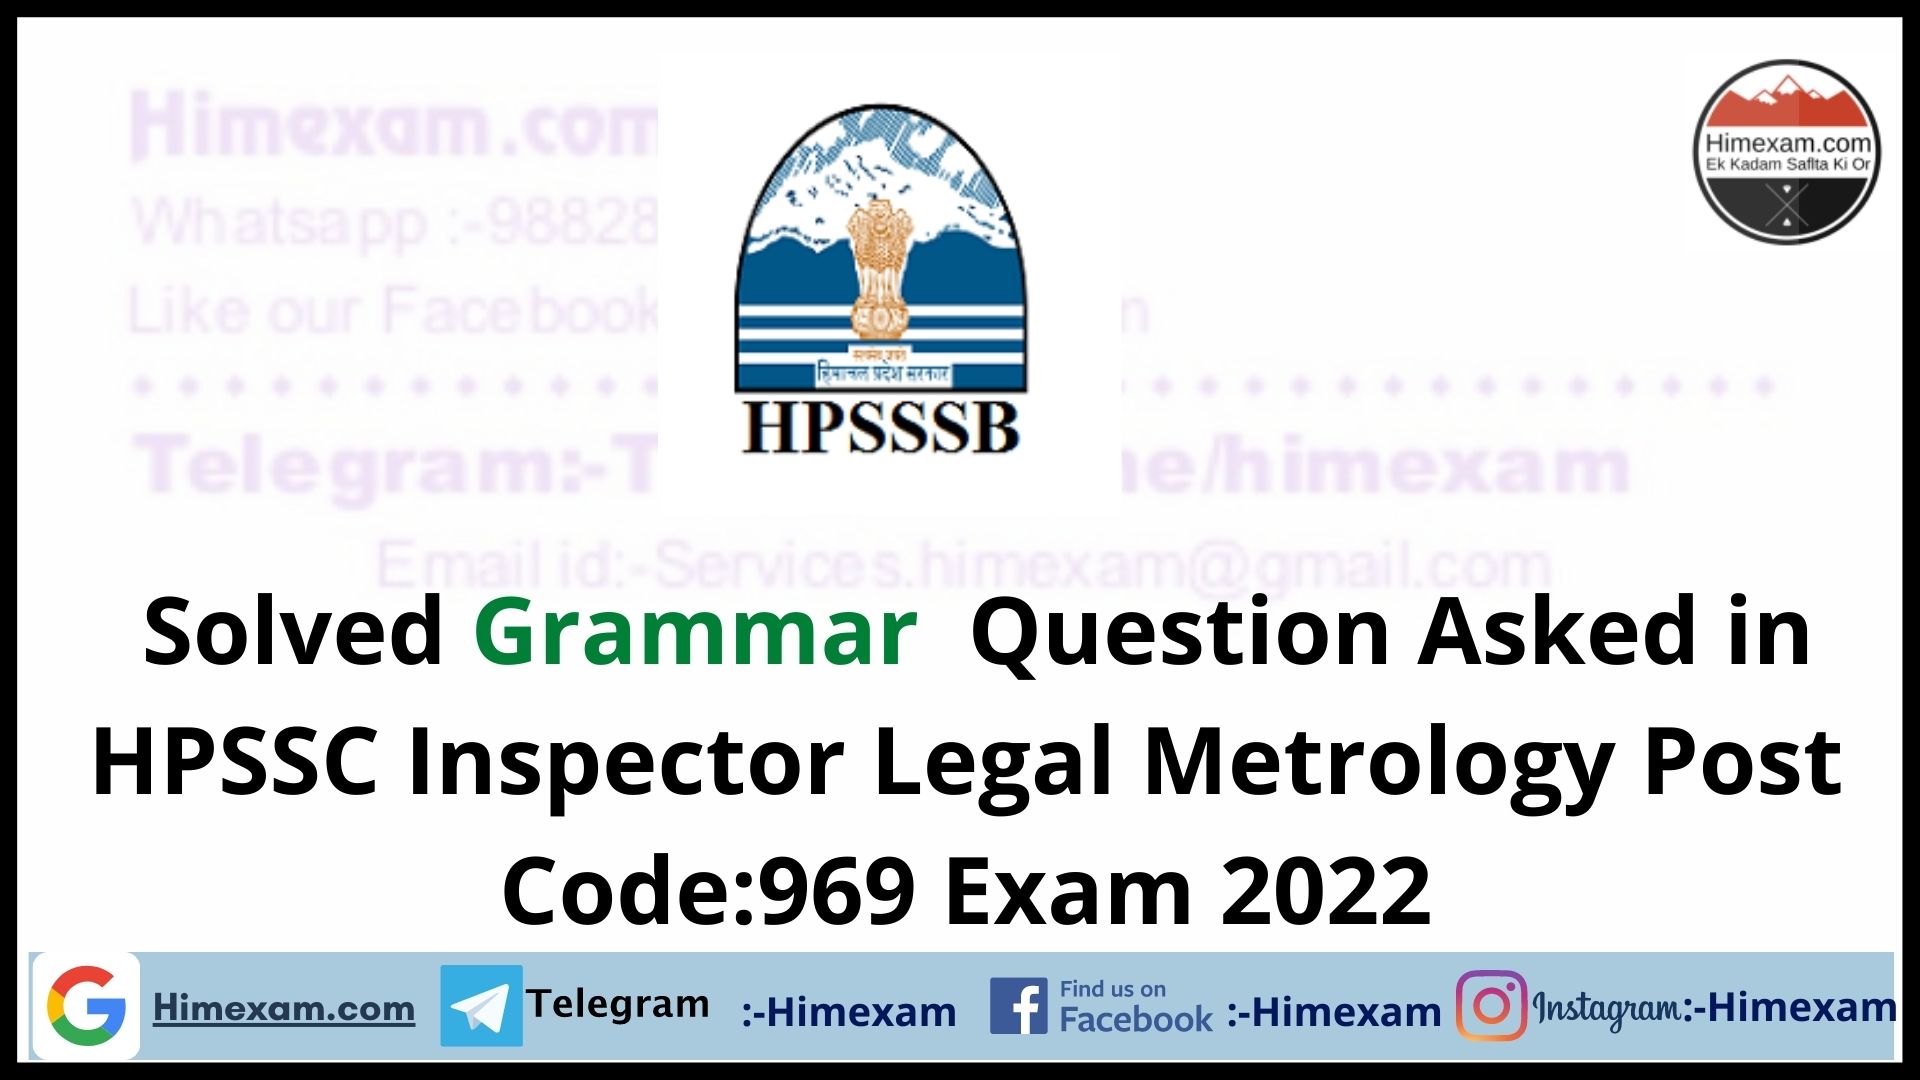 Solved Grammar Question Asked in HPSSC Inspector Legal Metrology Post Code:969 Exam 2022